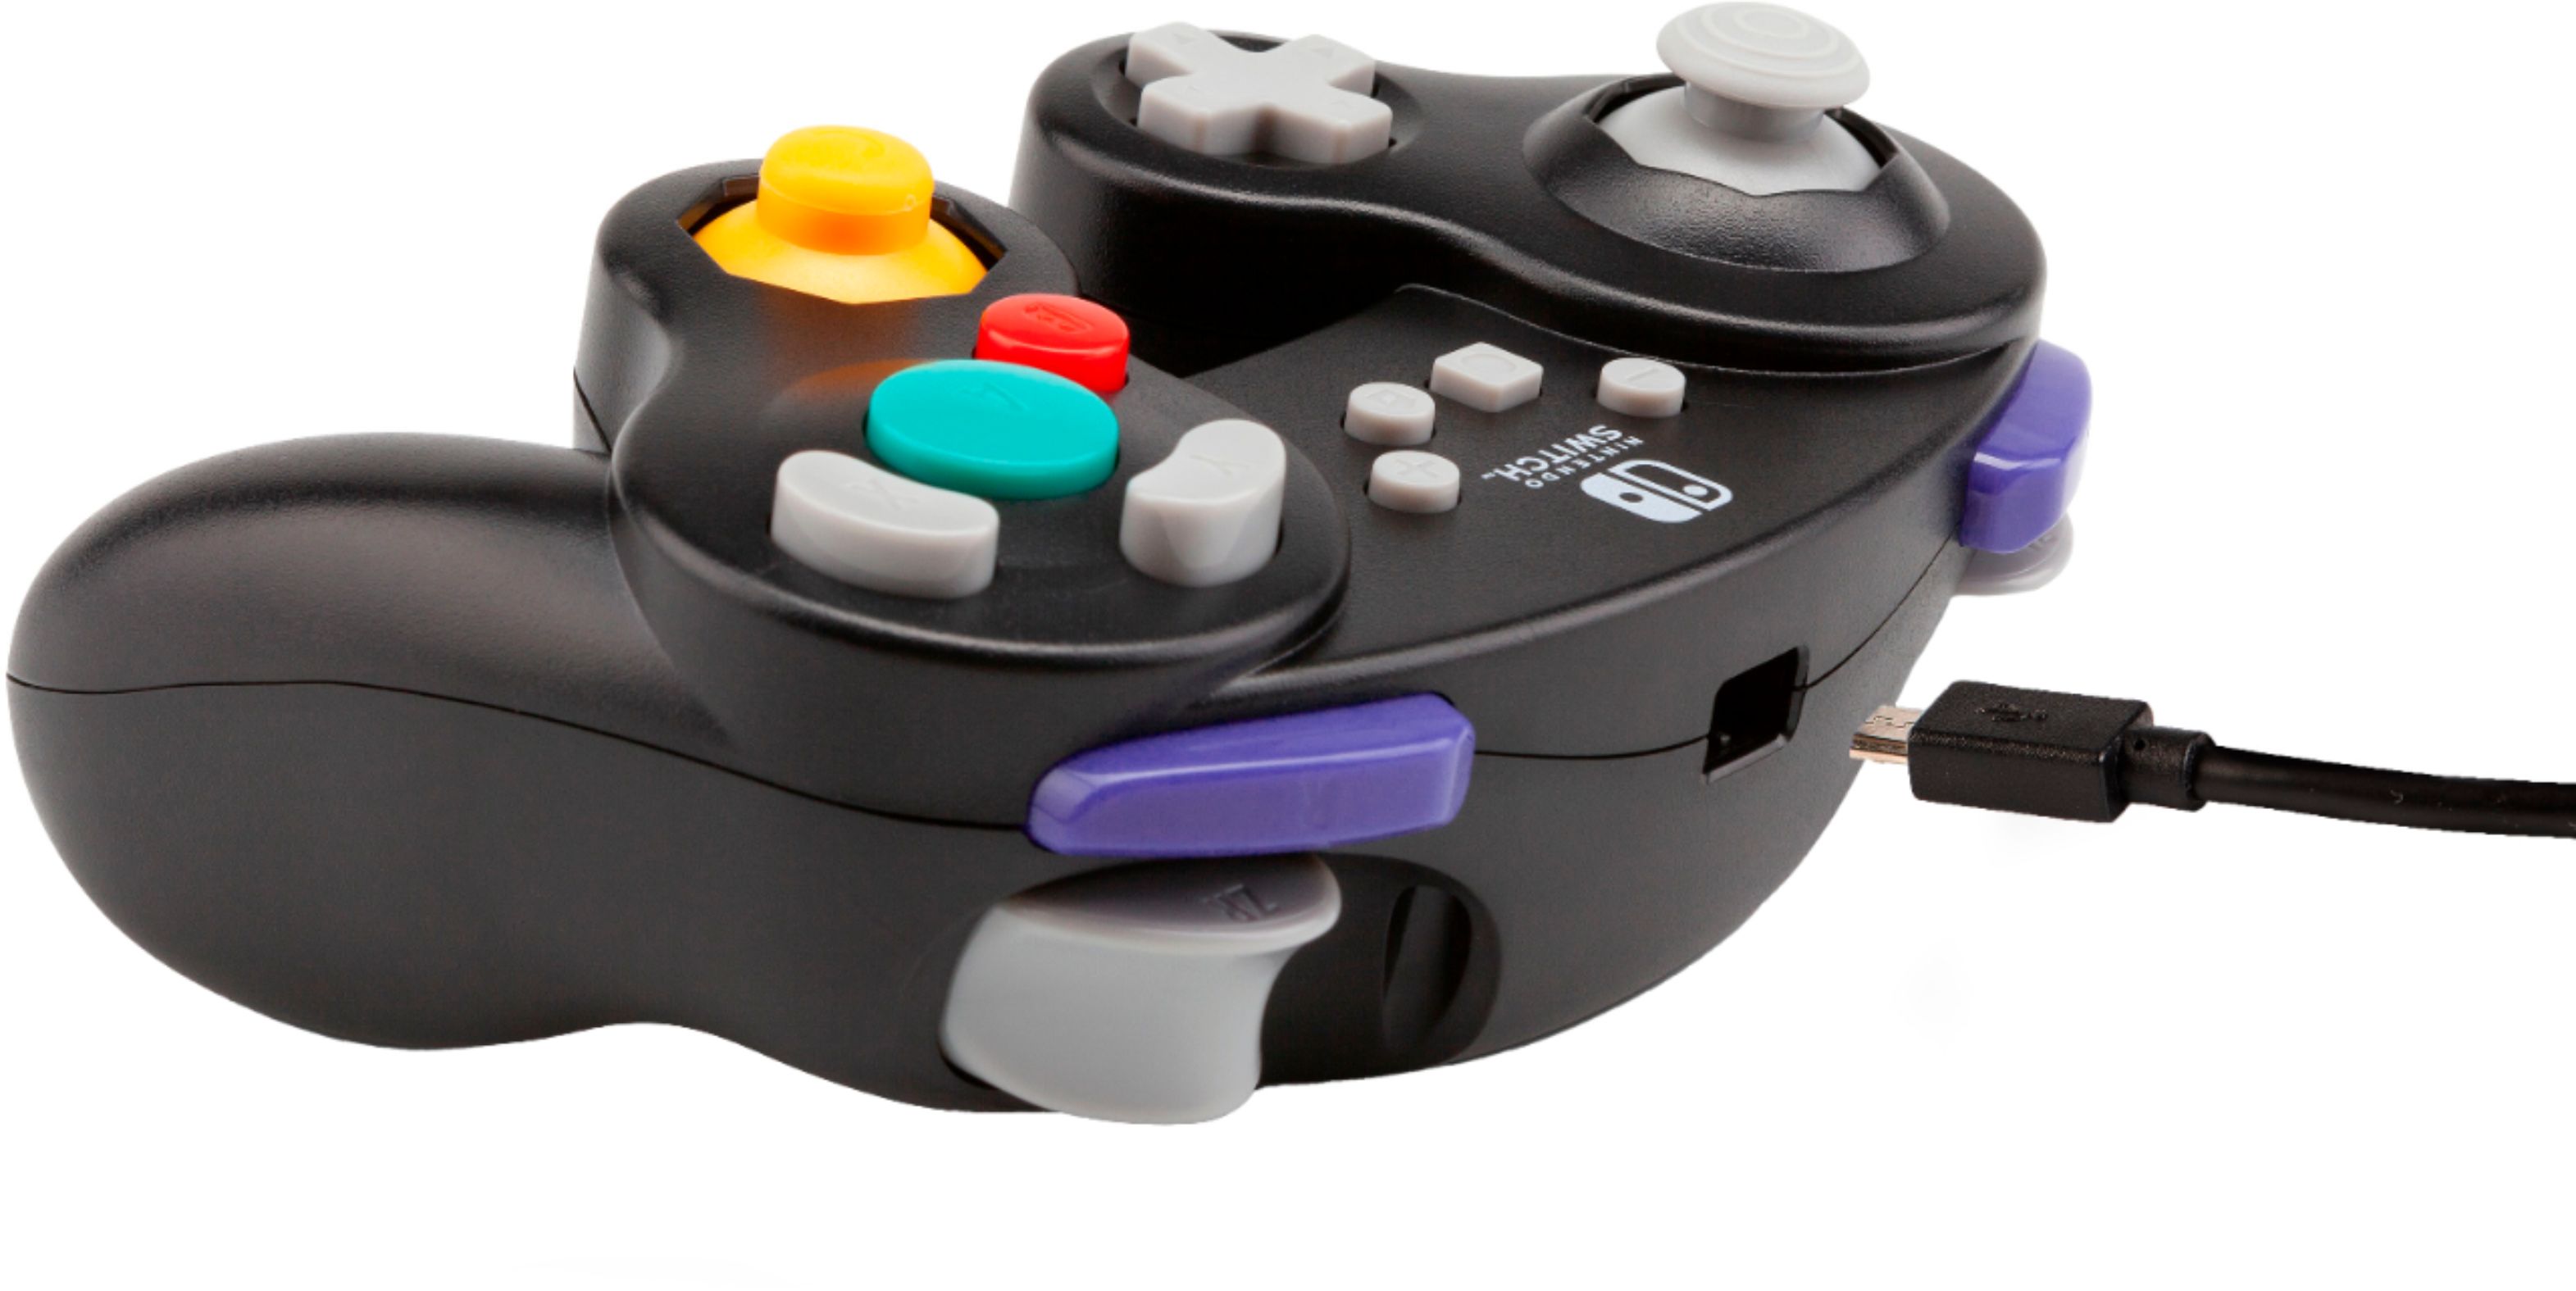 best buy gamecube controller